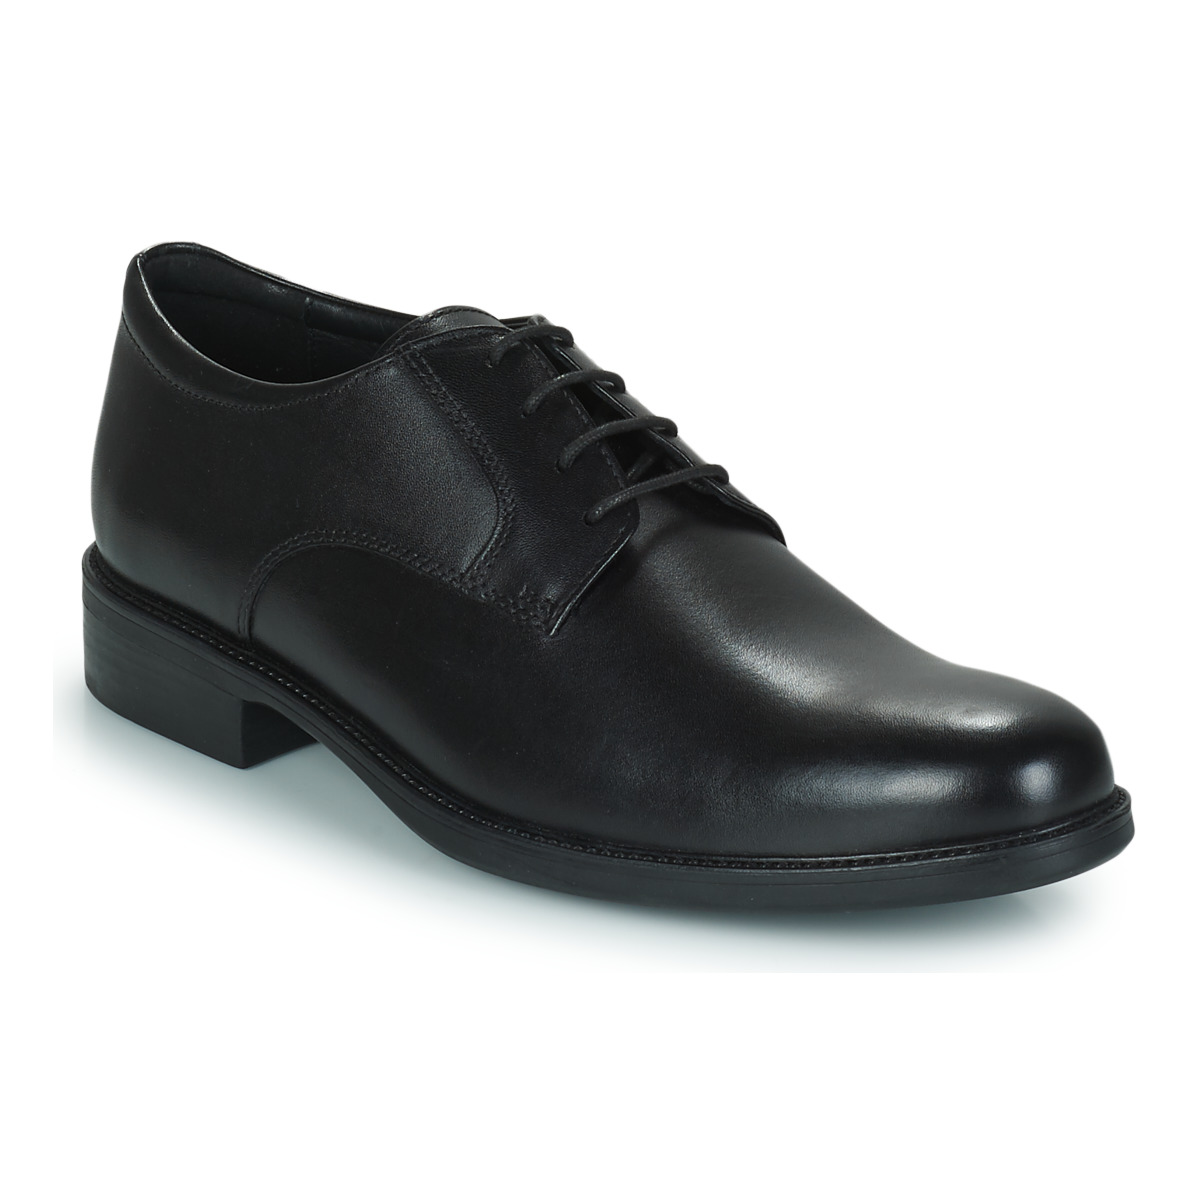 Carnaby мужская обувь. Ботинки Carnaby мужские. Carnaby полуботинки мужские. Классические мужские обуви Geox. Carnaby мужская коллекция 2008 год.